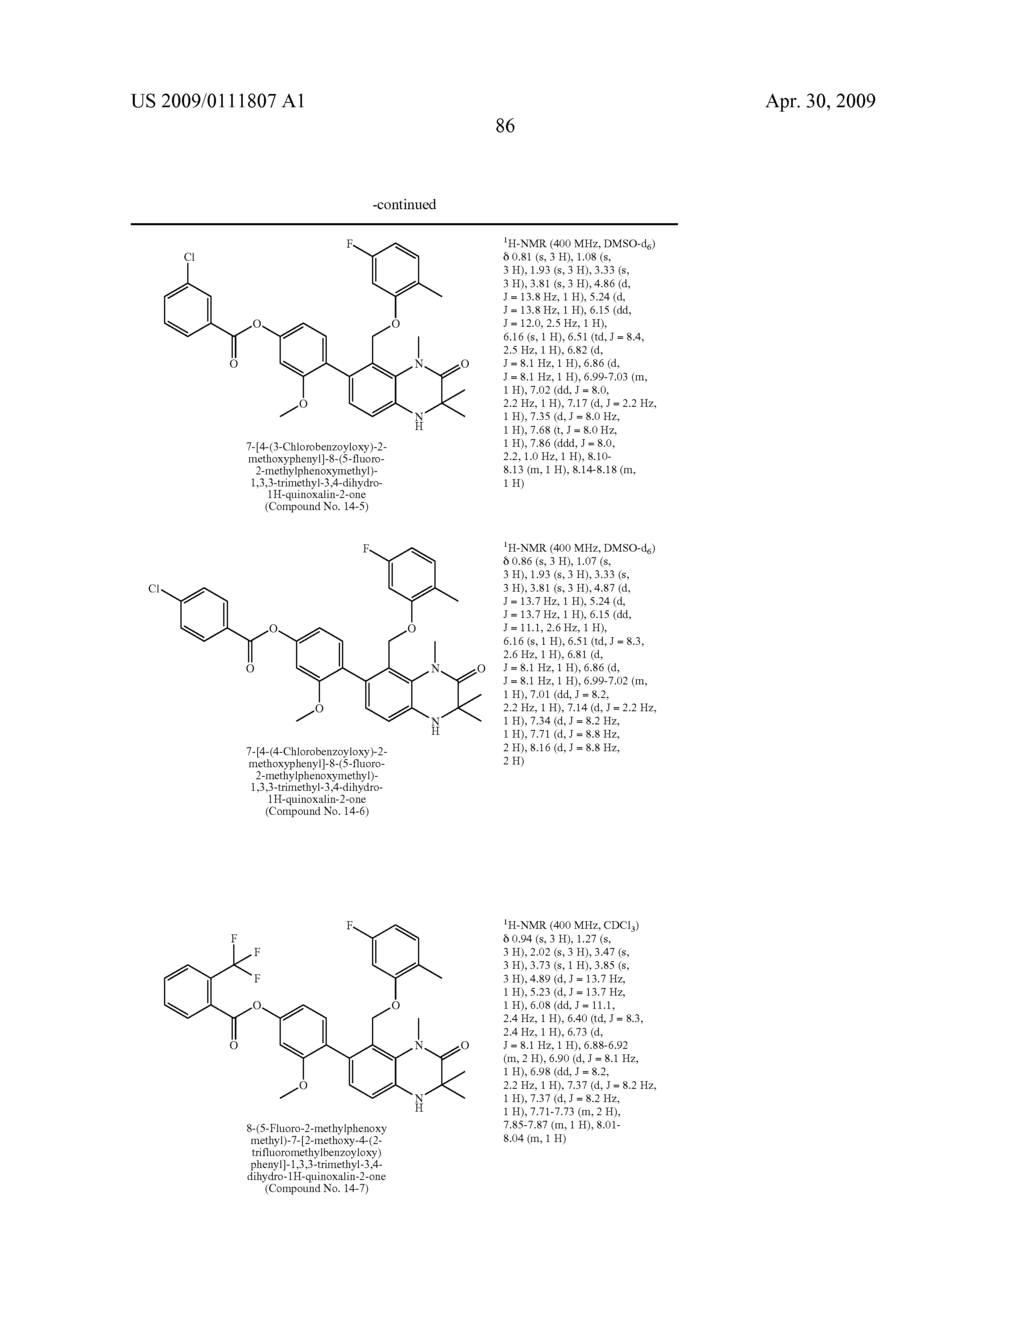 Novel 1,2,3,4-Tetrahydroquinoxaline Derivative Having Glucocorticoid Receptor Binding Activity - diagram, schematic, and image 87